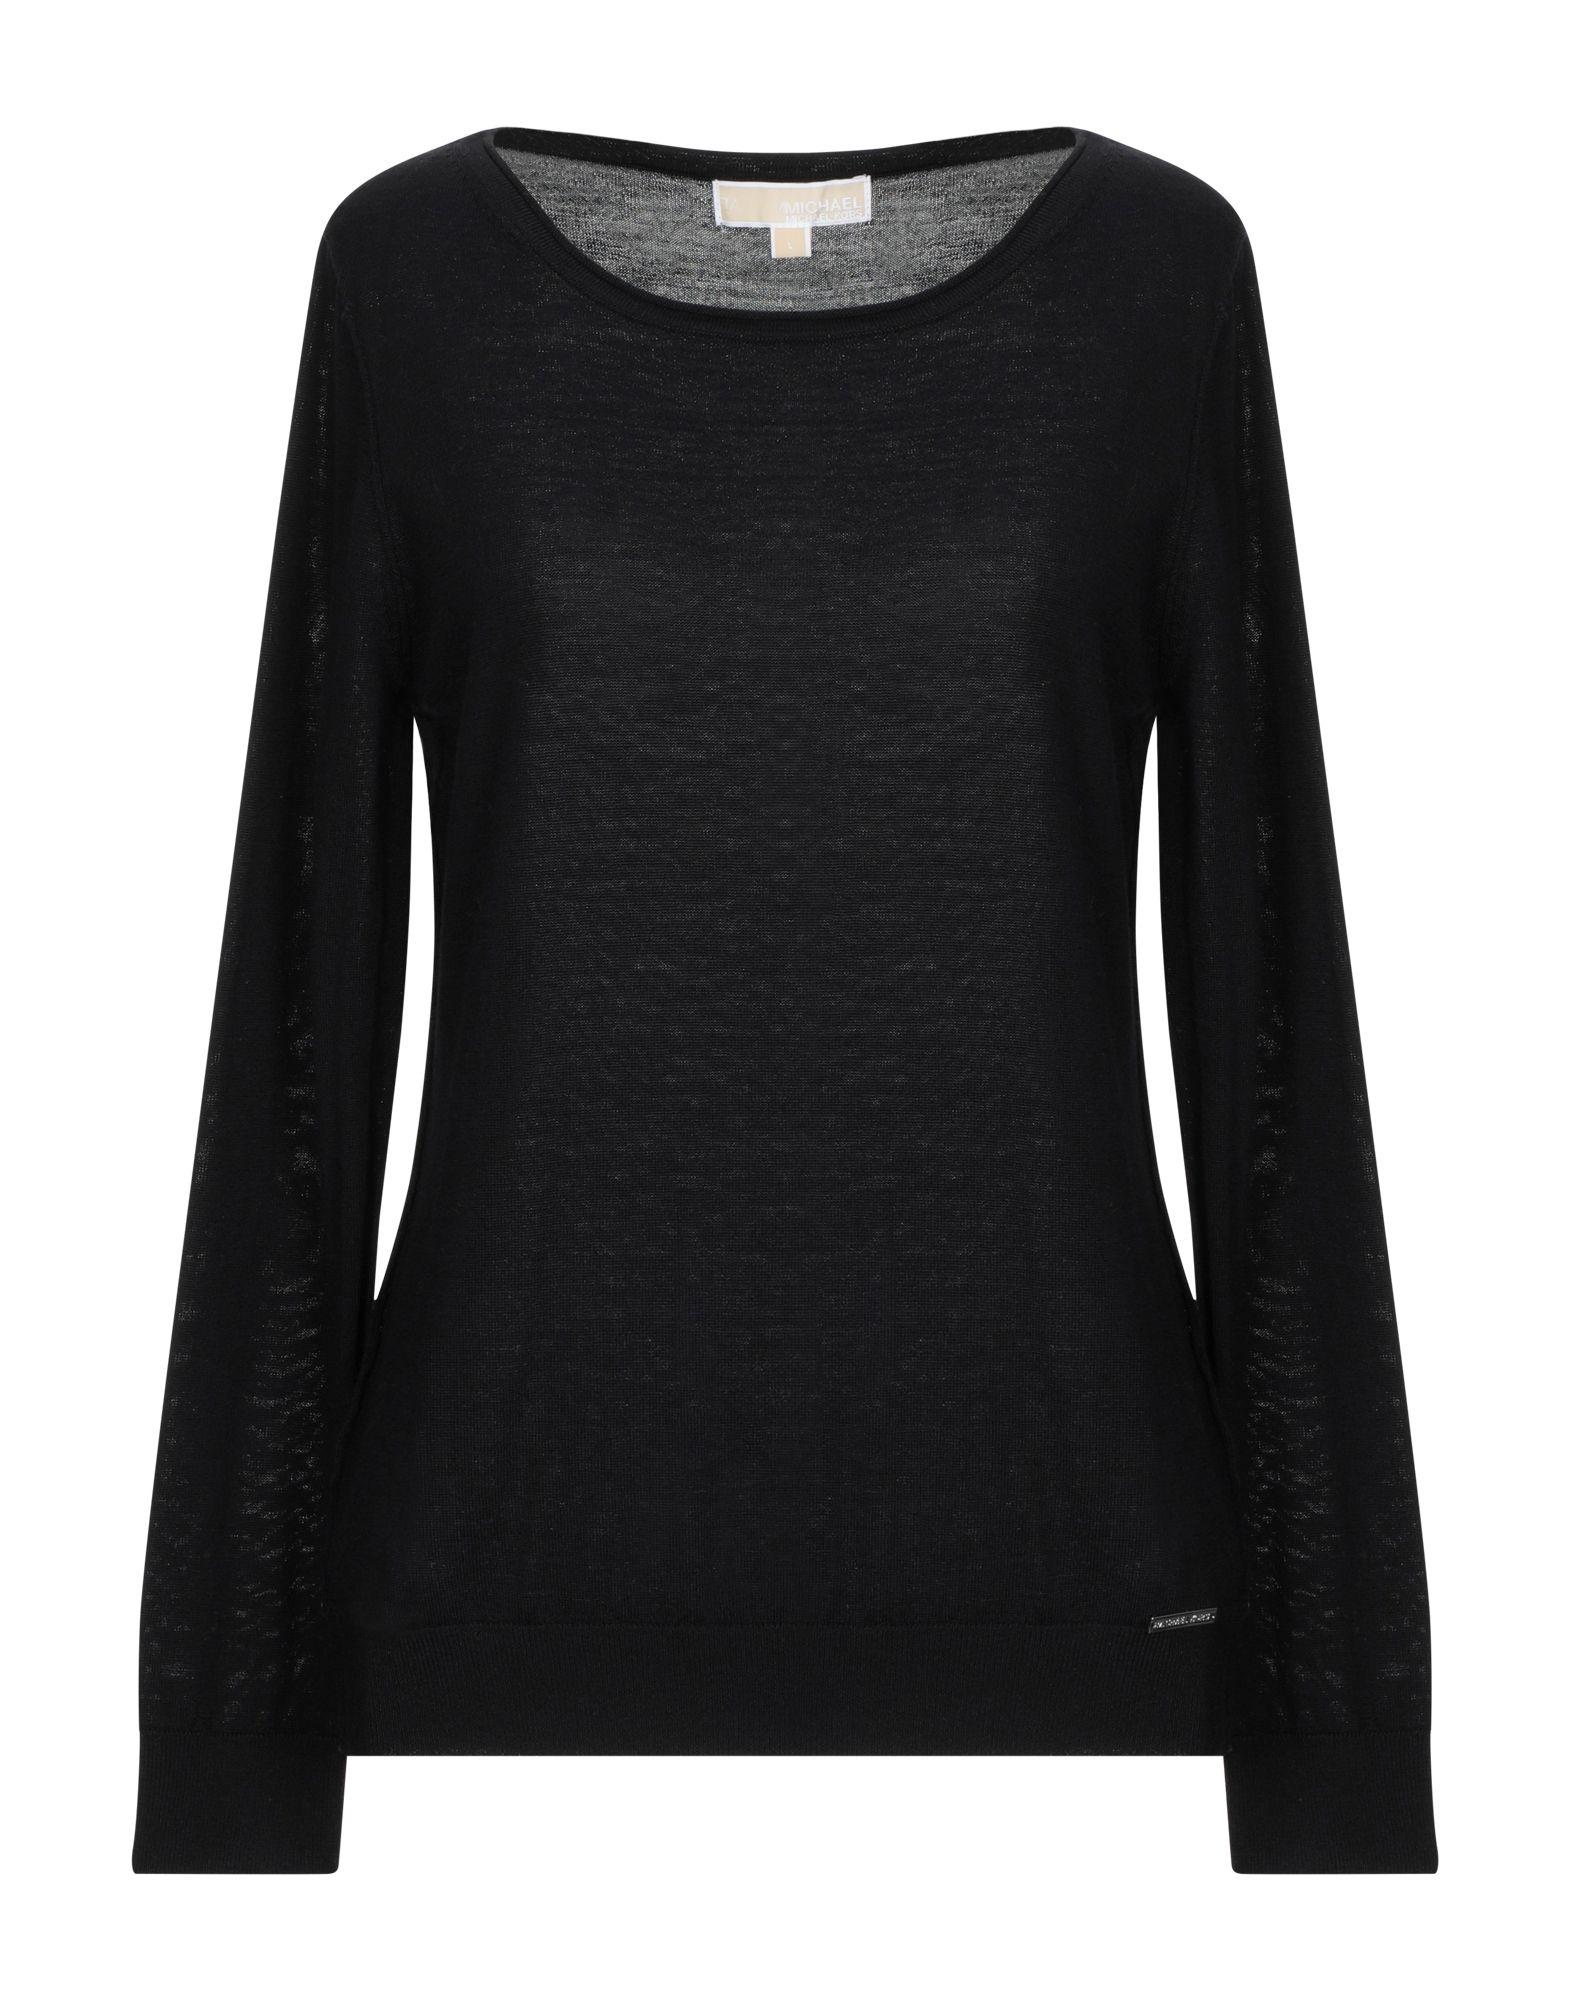 Lyst - MICHAEL Michael Kors Sweater in Black